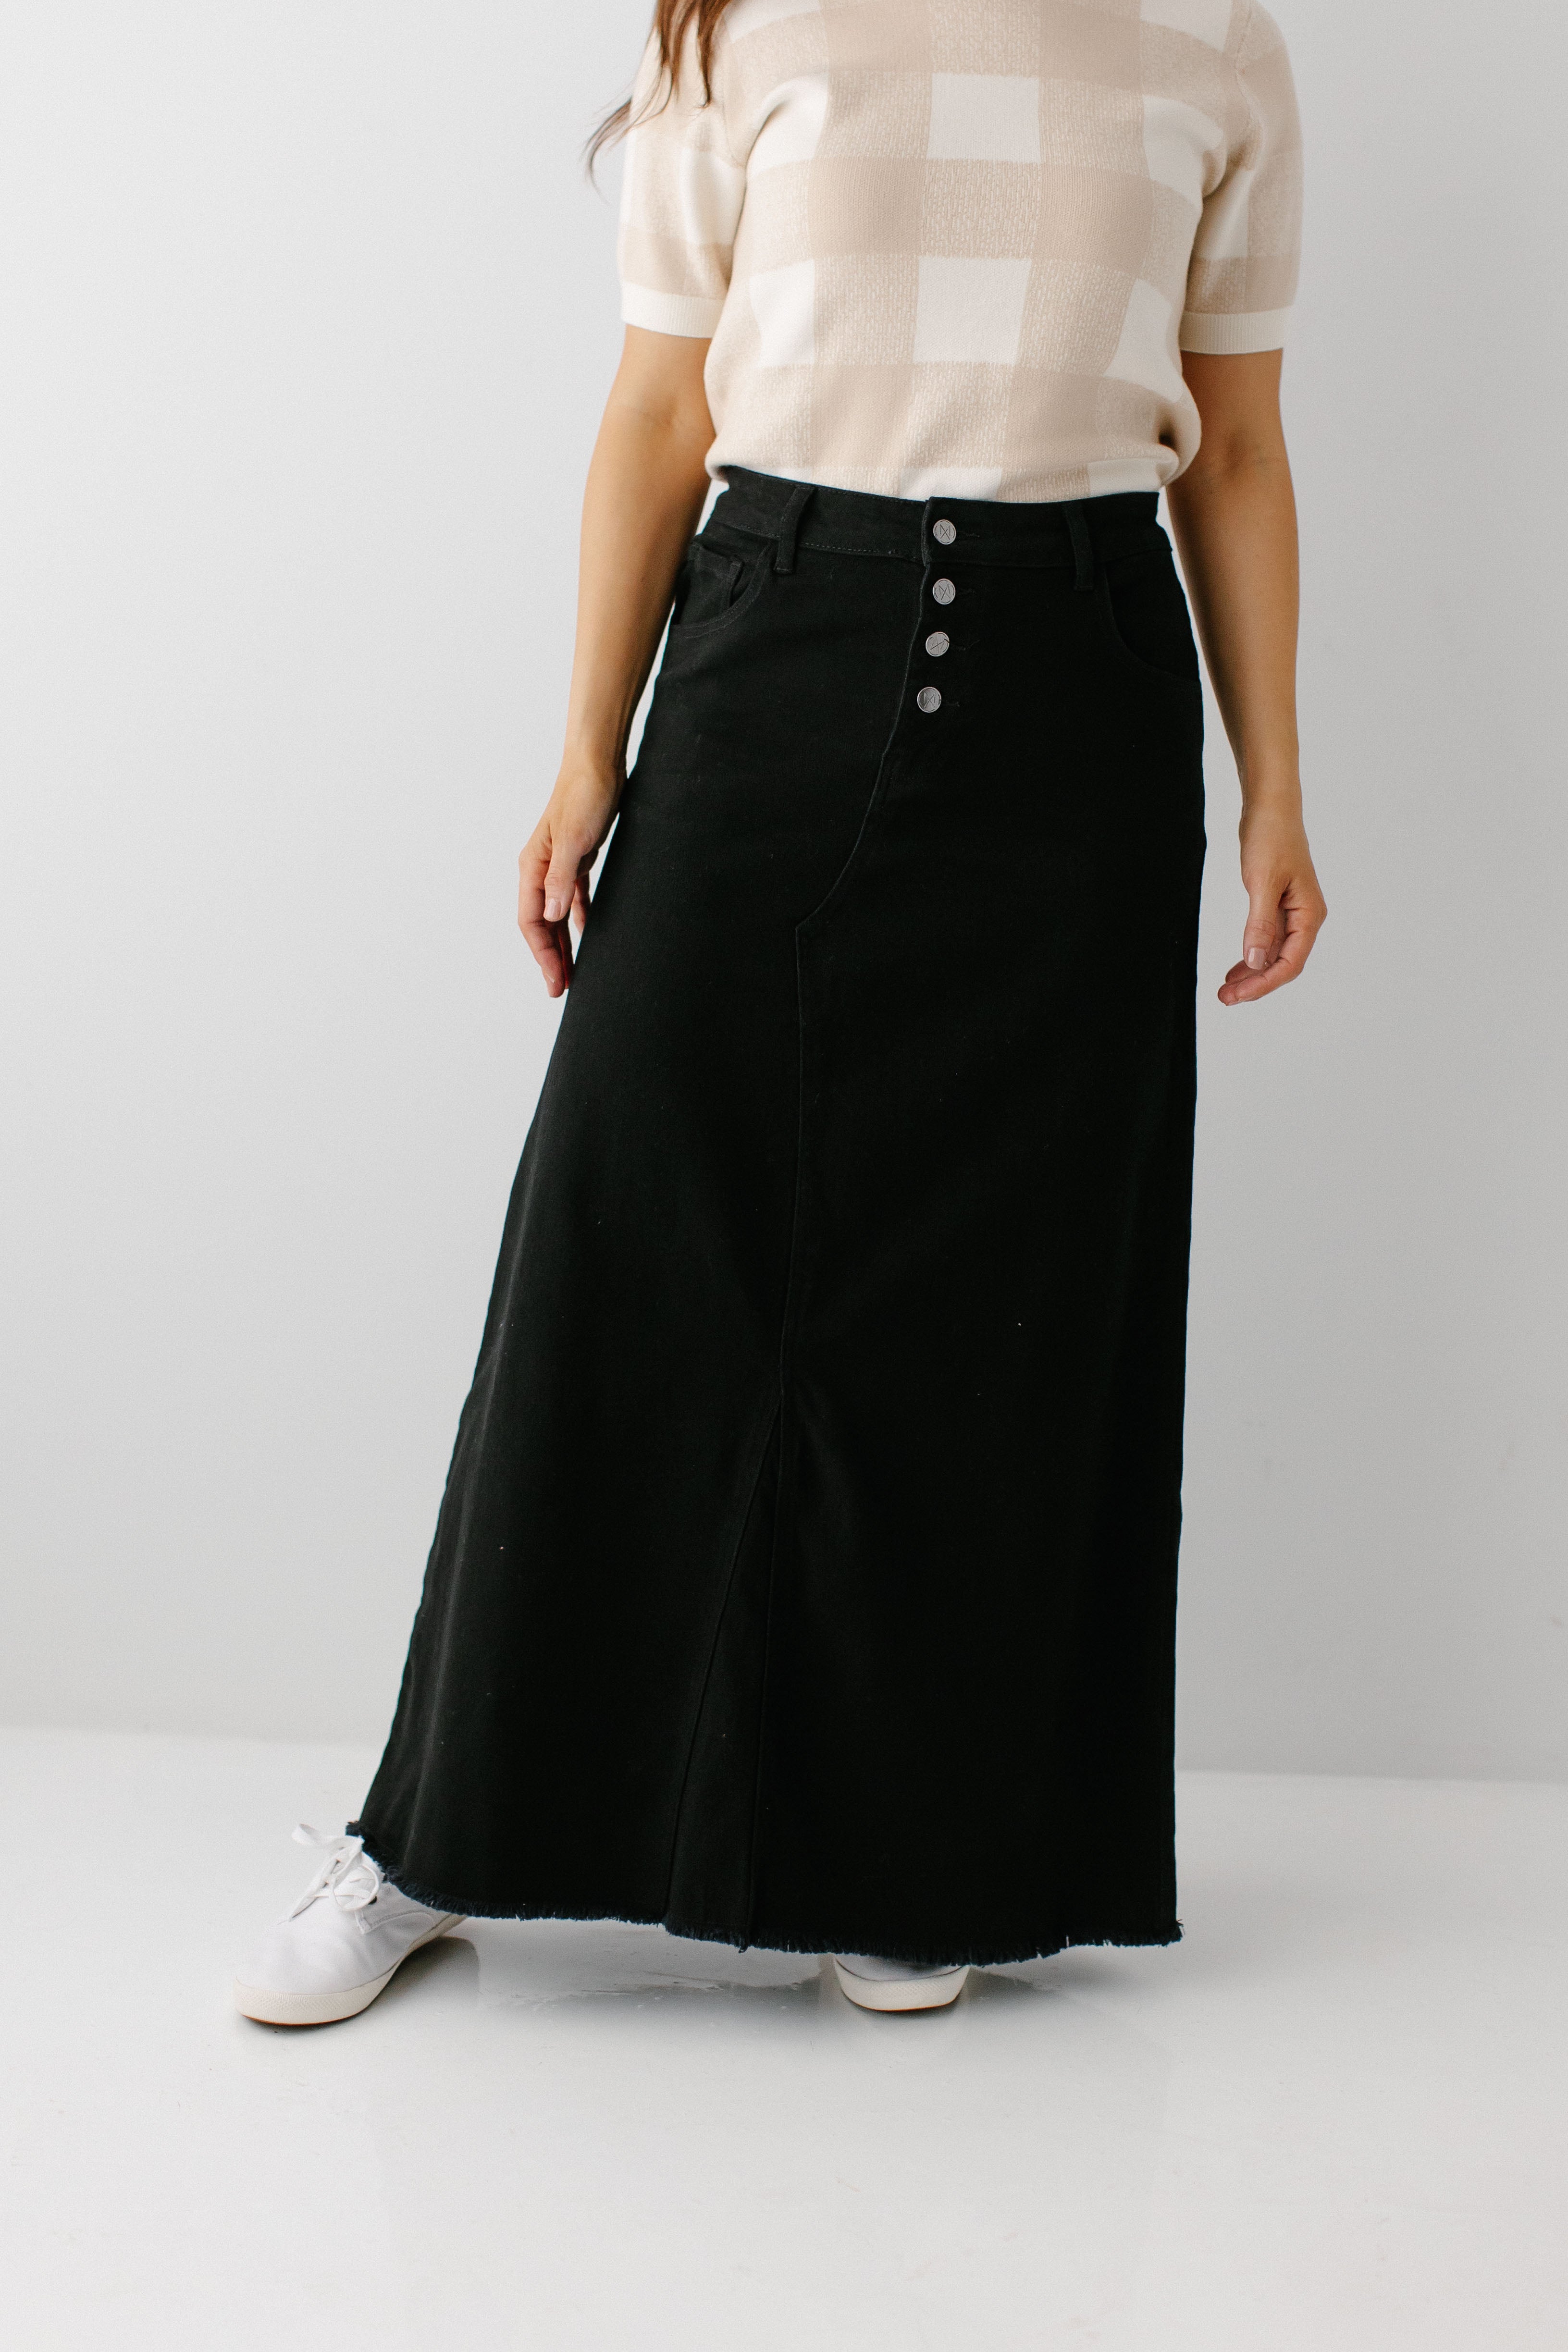 Black Denim Skirt - Mini Skirt - High-Waisted Skirt - $44.00 - Lulus